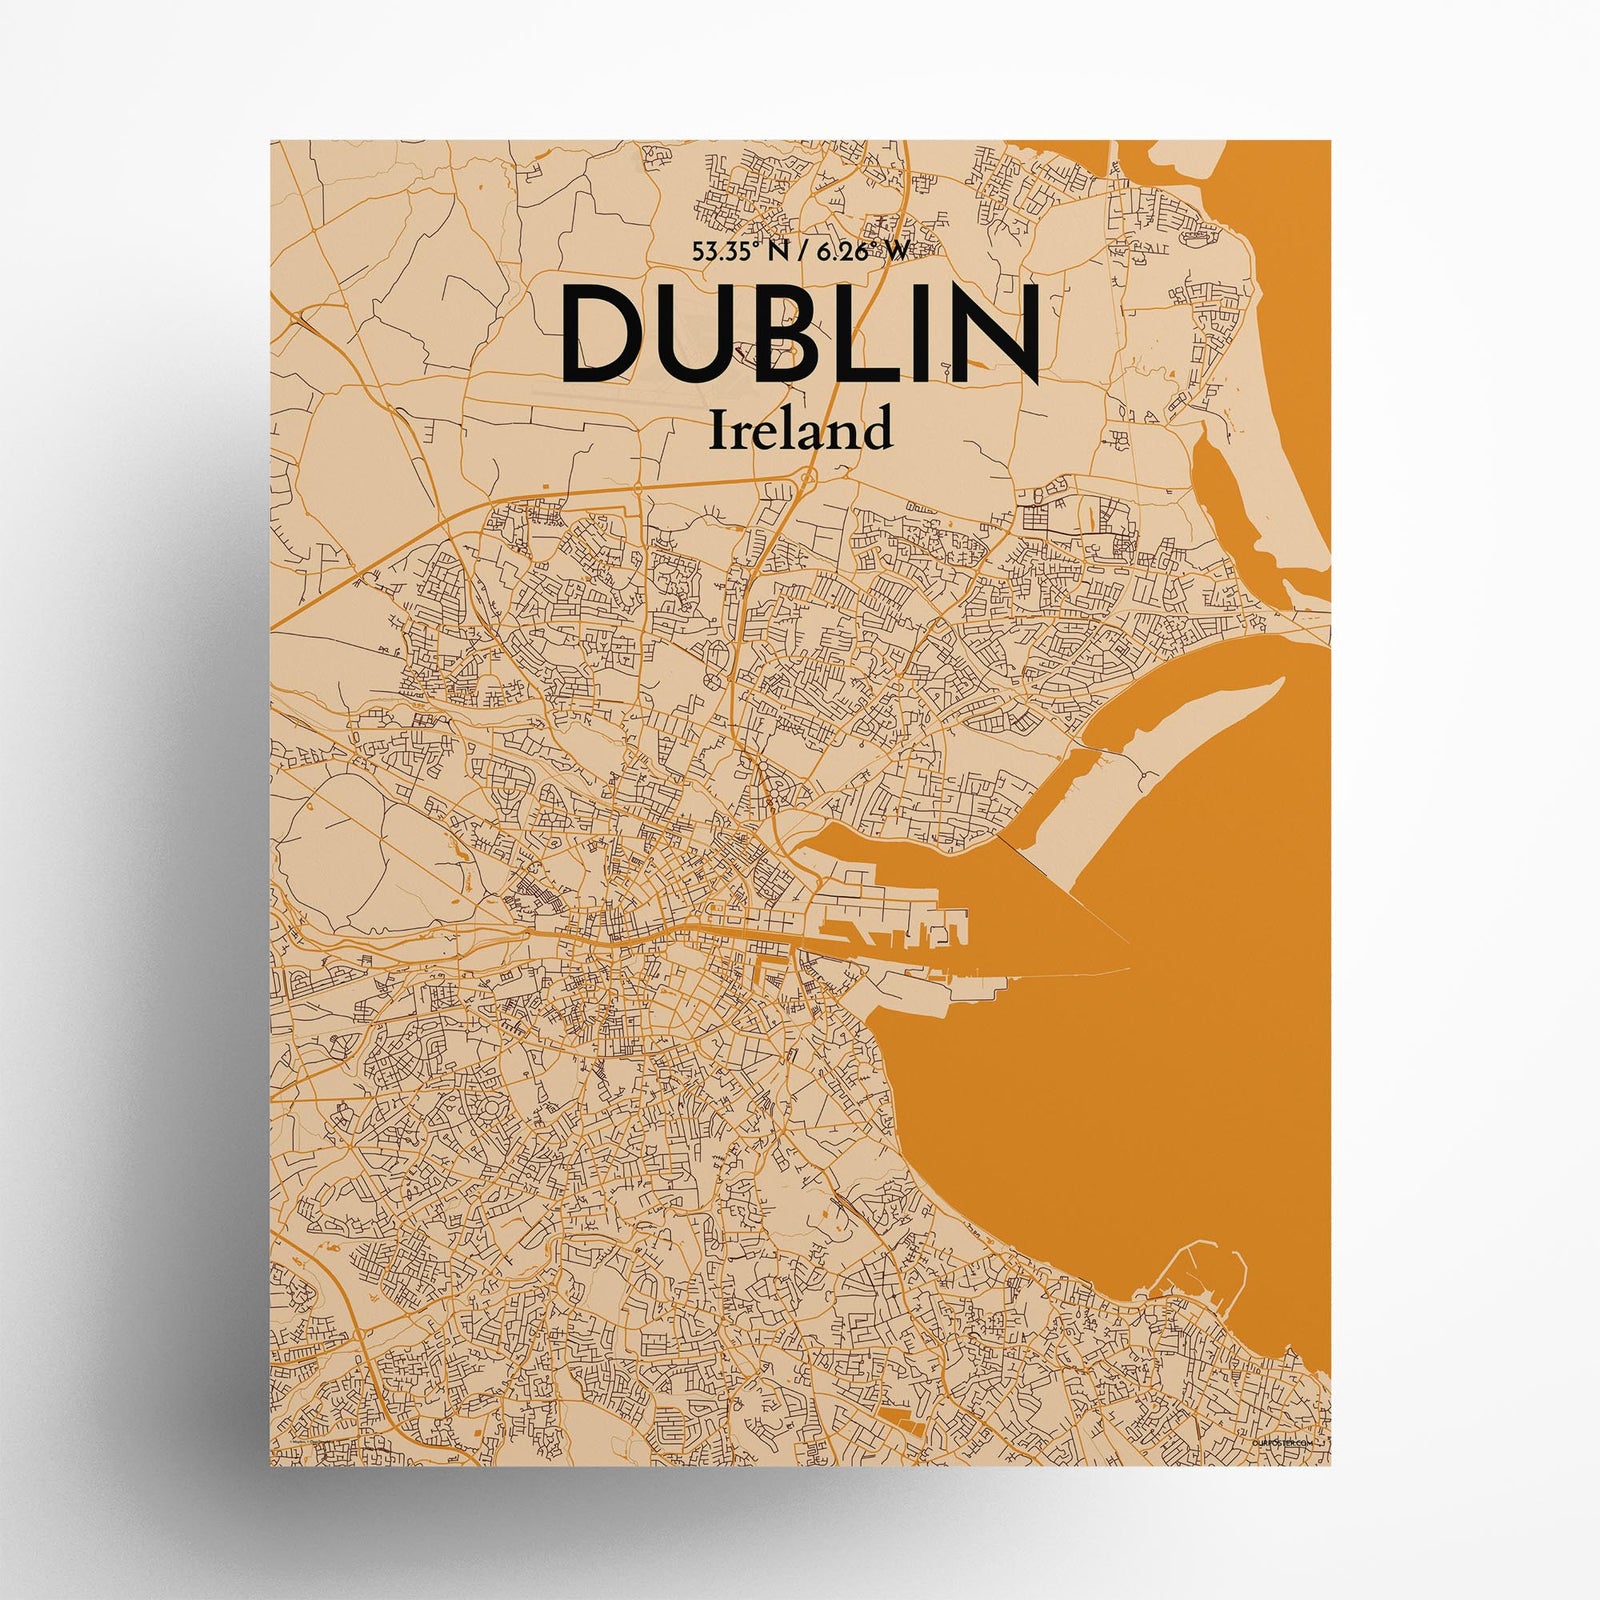 Dublin City Map Poster